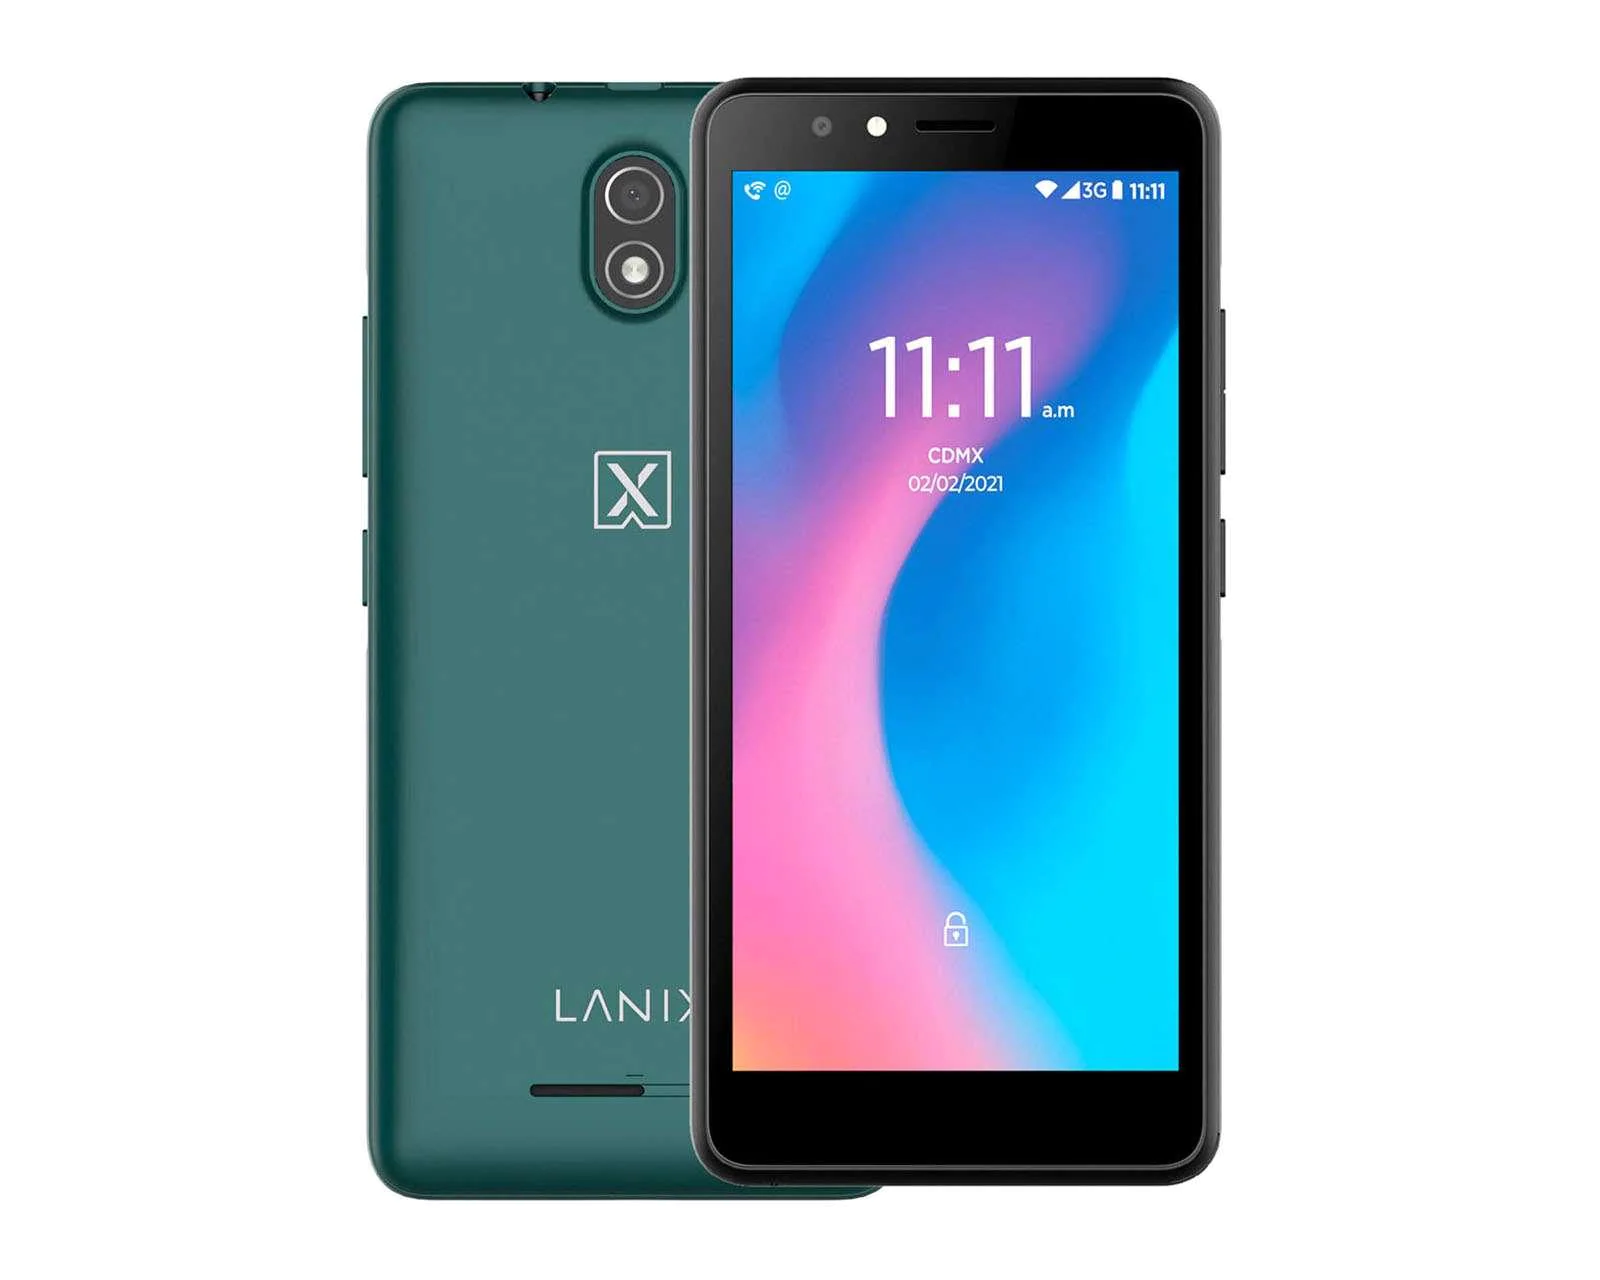 Teléfono Celular LANIX X560 - 5 pulgadas, Quad Cortex-A7, 1GB, Verde, AndroidTM 11 GO Edition